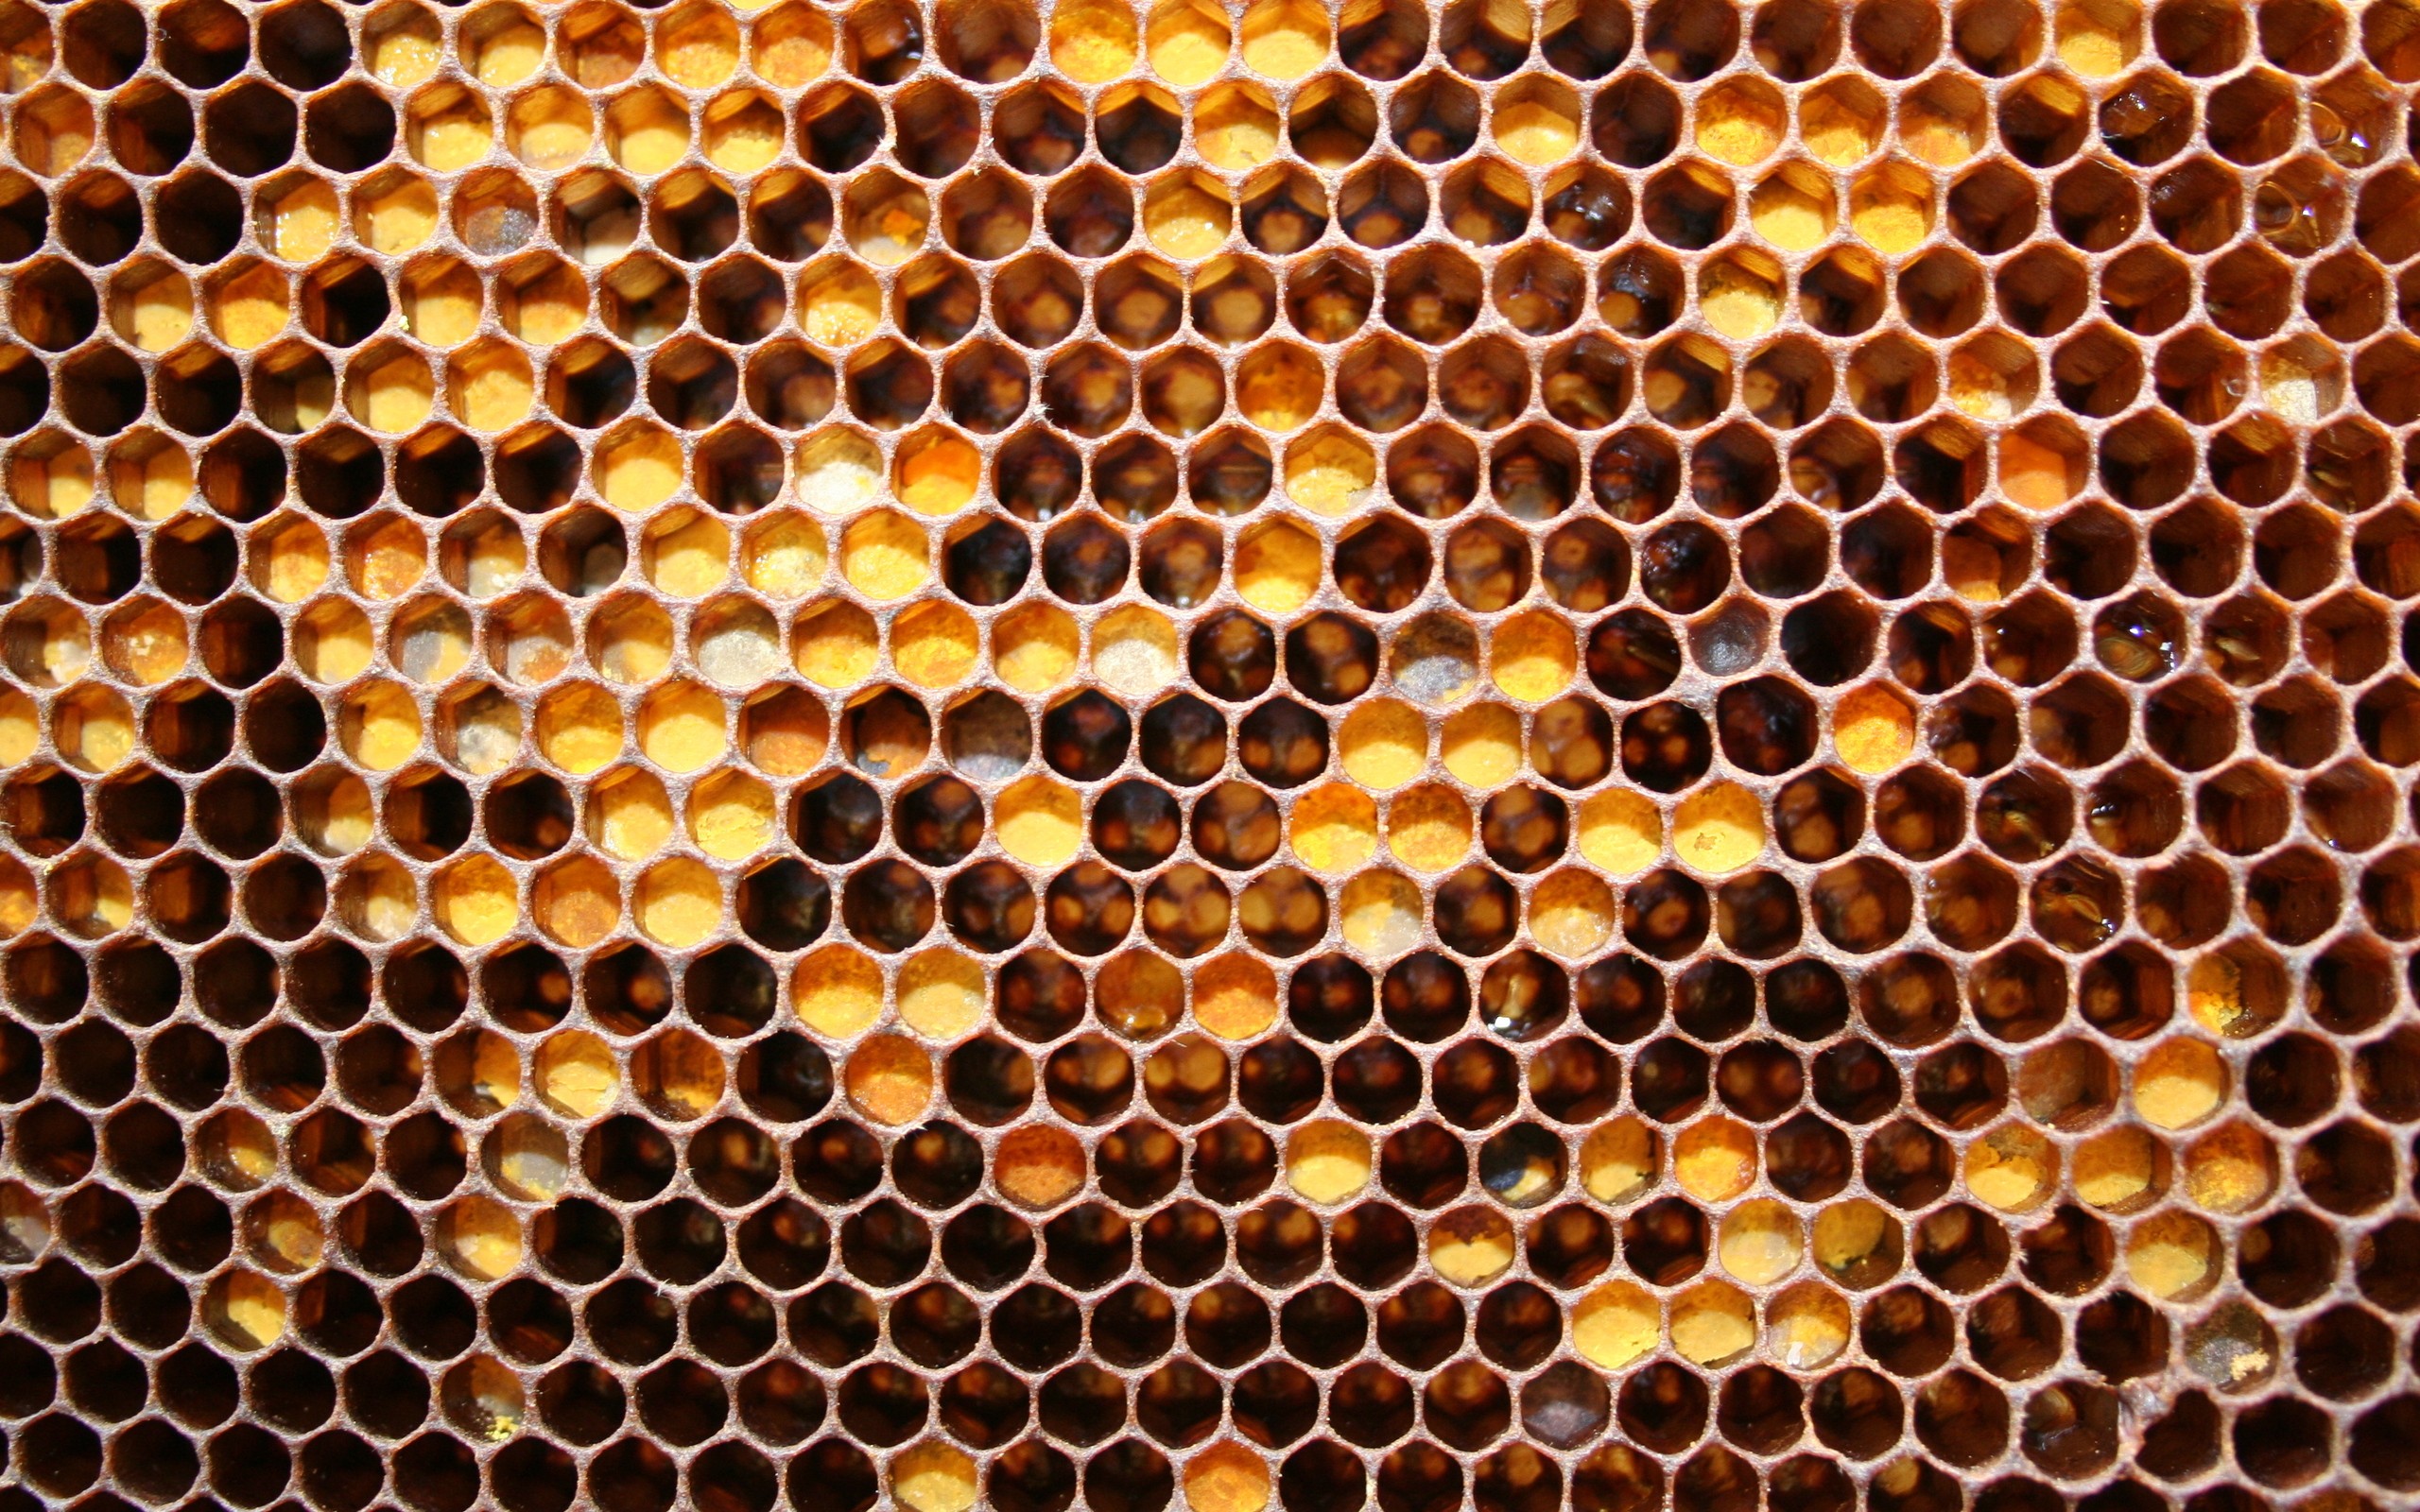 Download the Honey Honeycomb Wallpaper, Honey Honeycomb iPhone